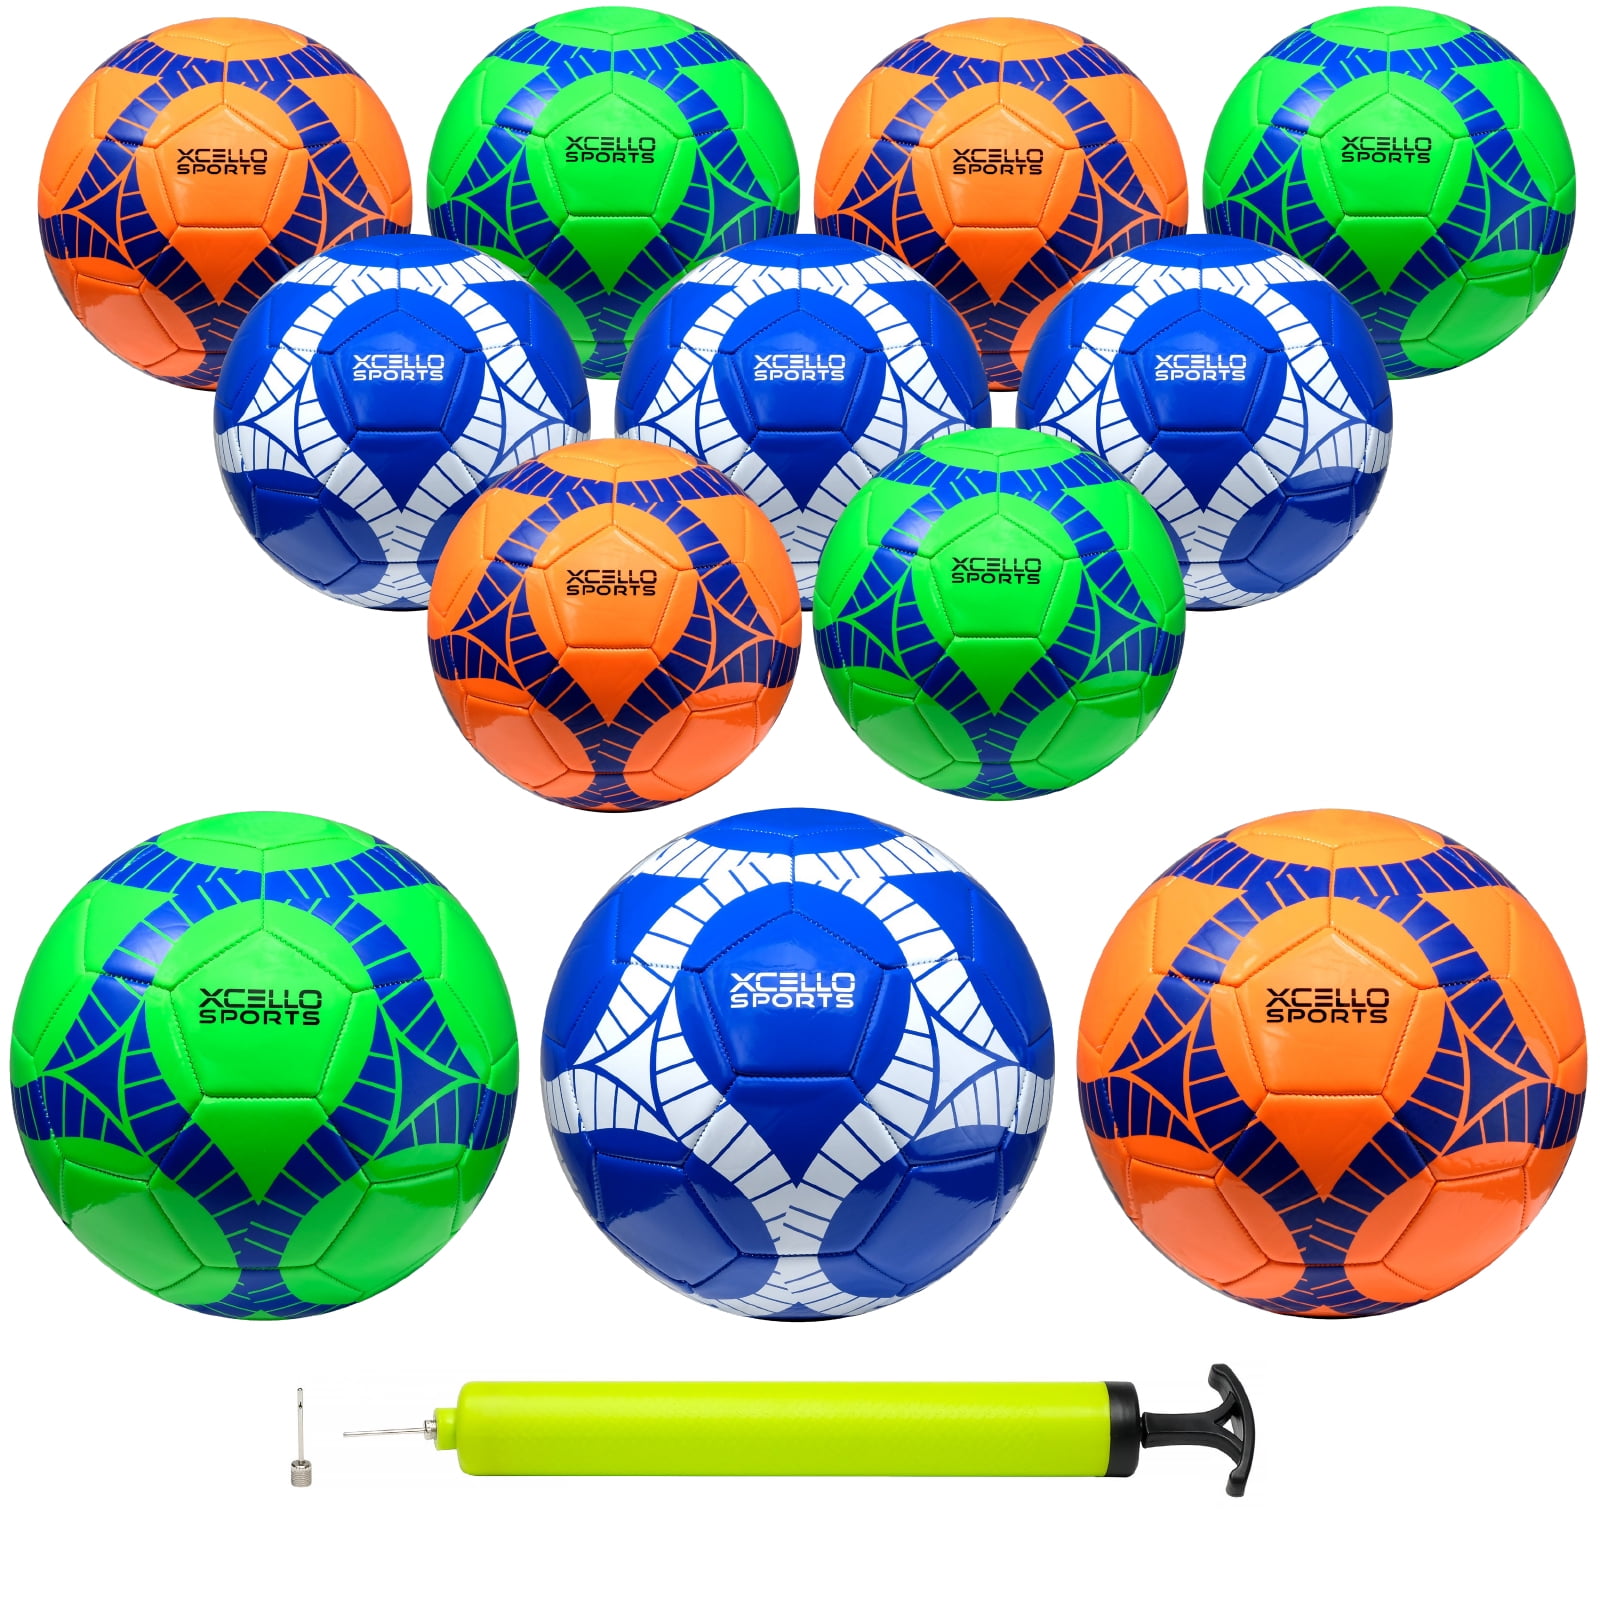 Swerve Ball KickerBall Football - Orange 817889011900